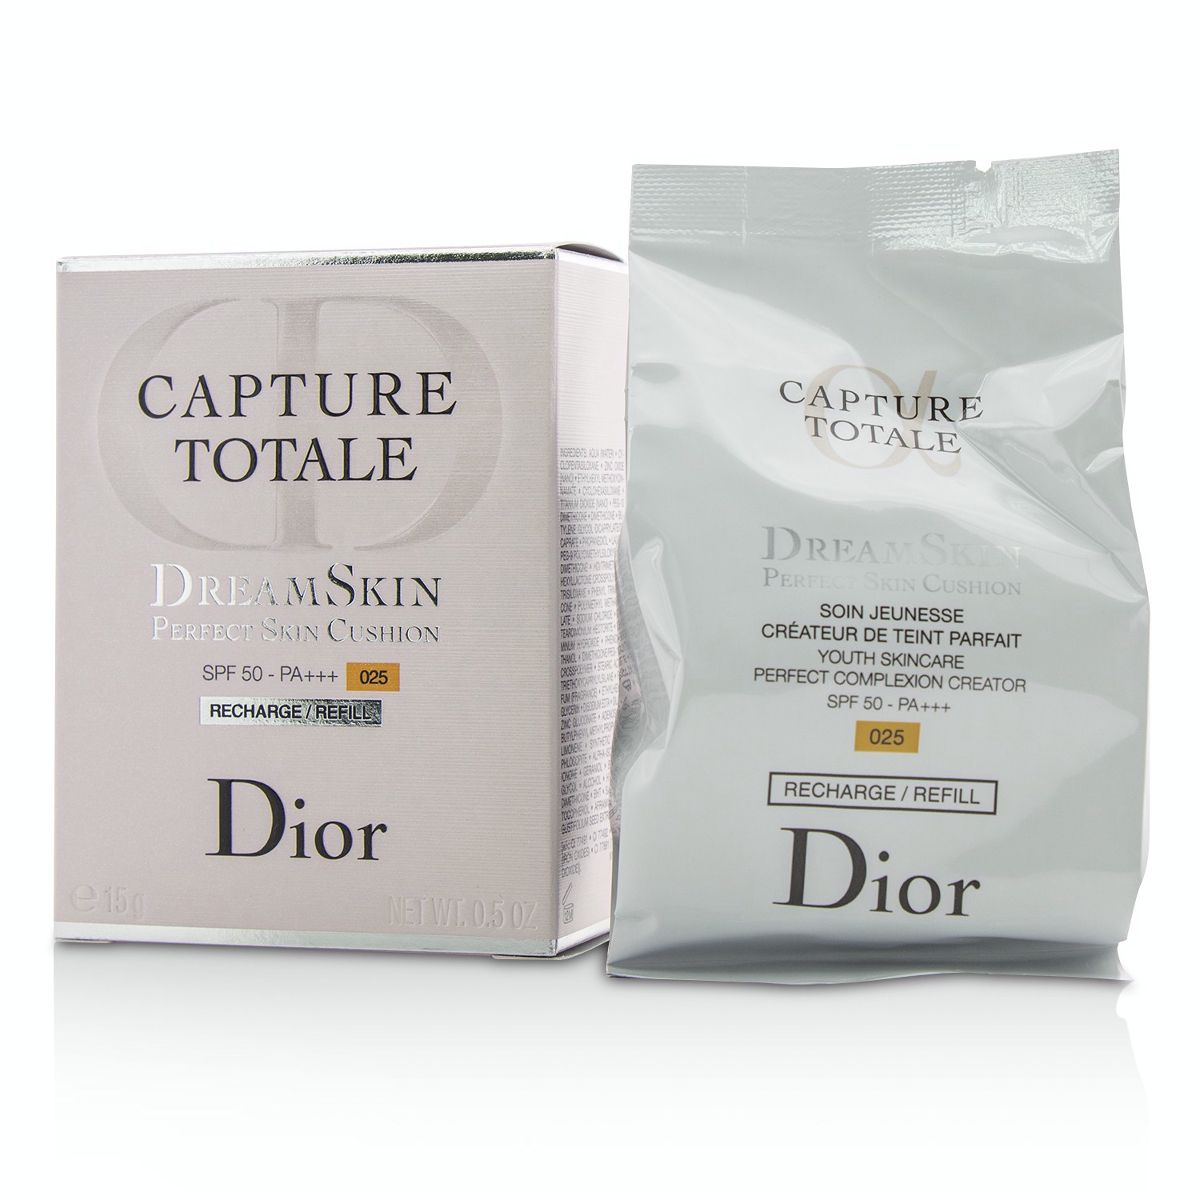 Capture Totale Dreamskin Perfect Skin Cushion SPF 50 Refill - # 025 Christian Dior Image